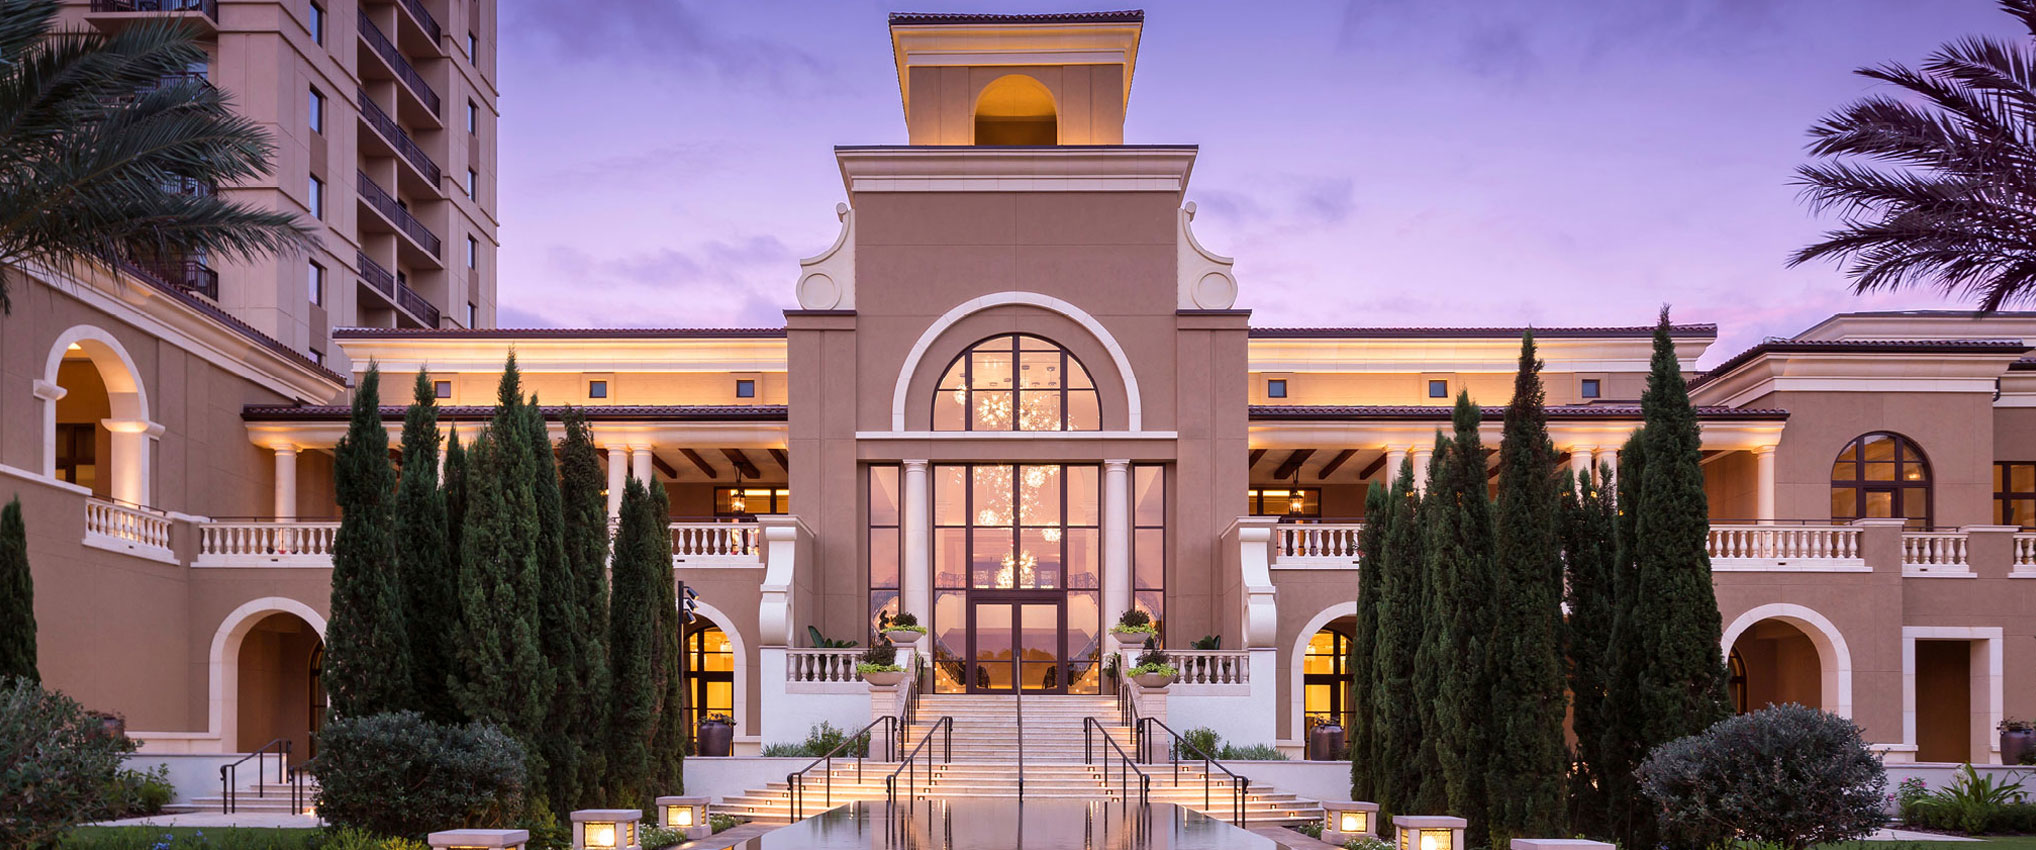 The Enchantment Begins: Four Seasons Resort Orlando at Walt Disney World Resort Debuts